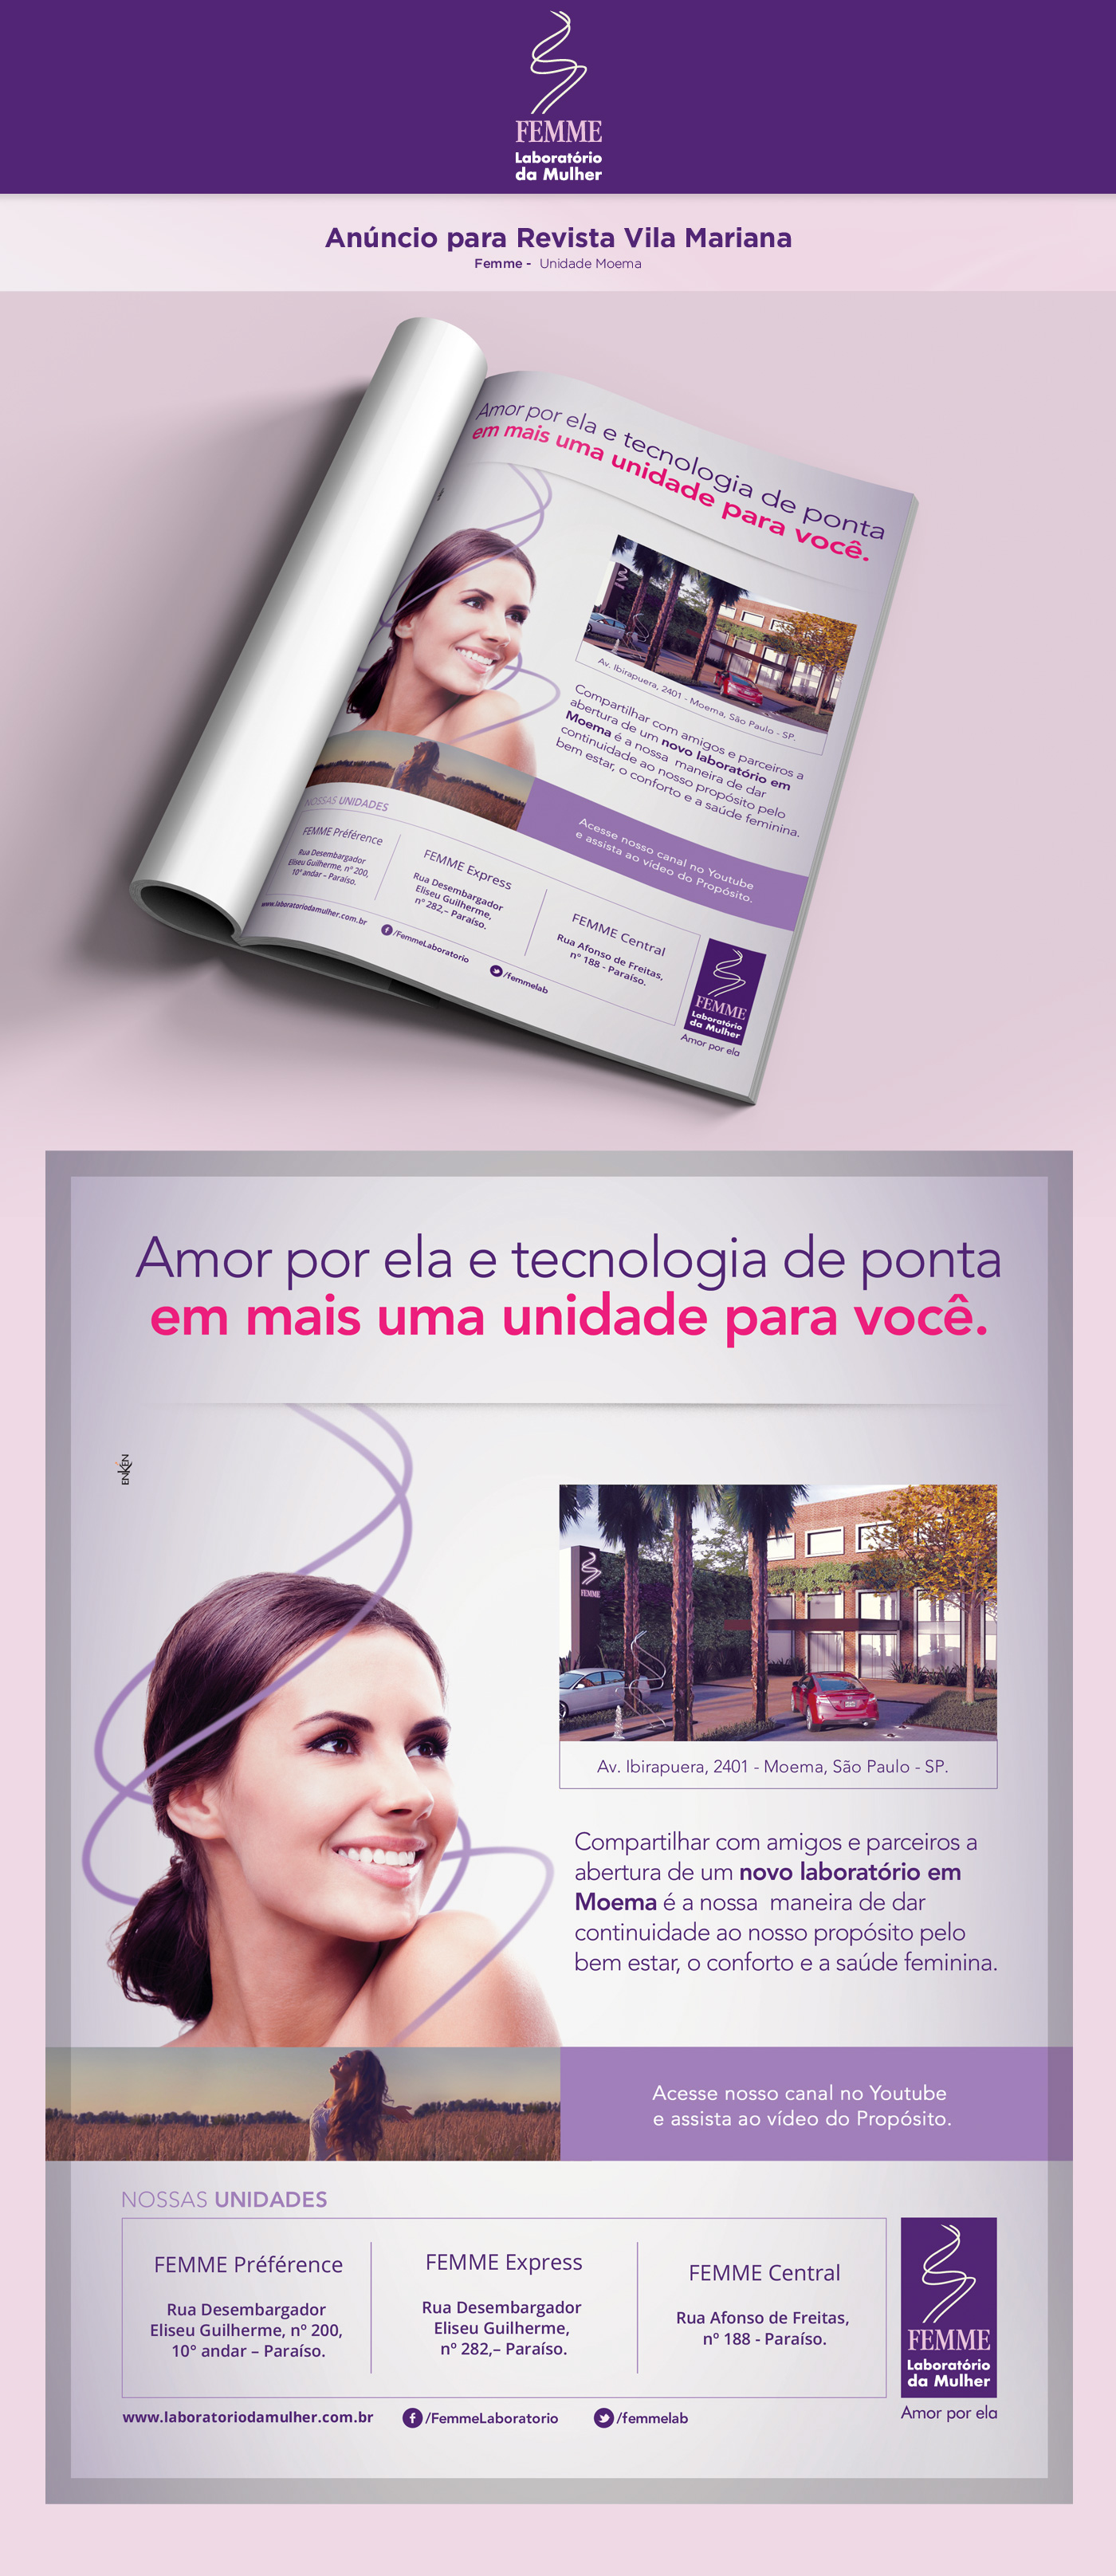 design femme magazine ads